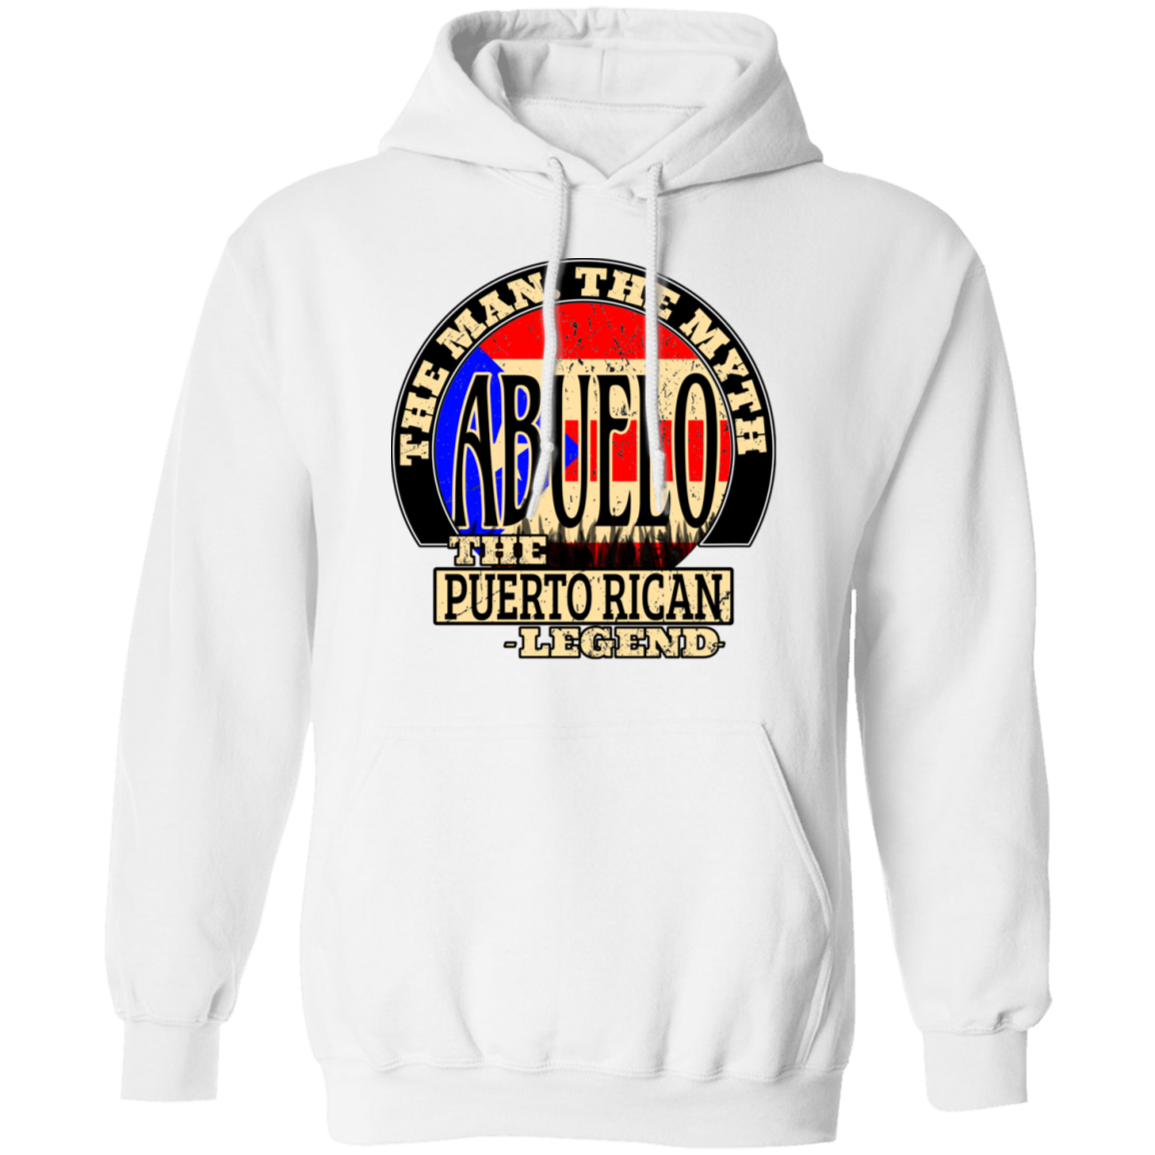 Abuelo The Legend Pullover Hoodie 8 oz. - Puerto Rican Pride